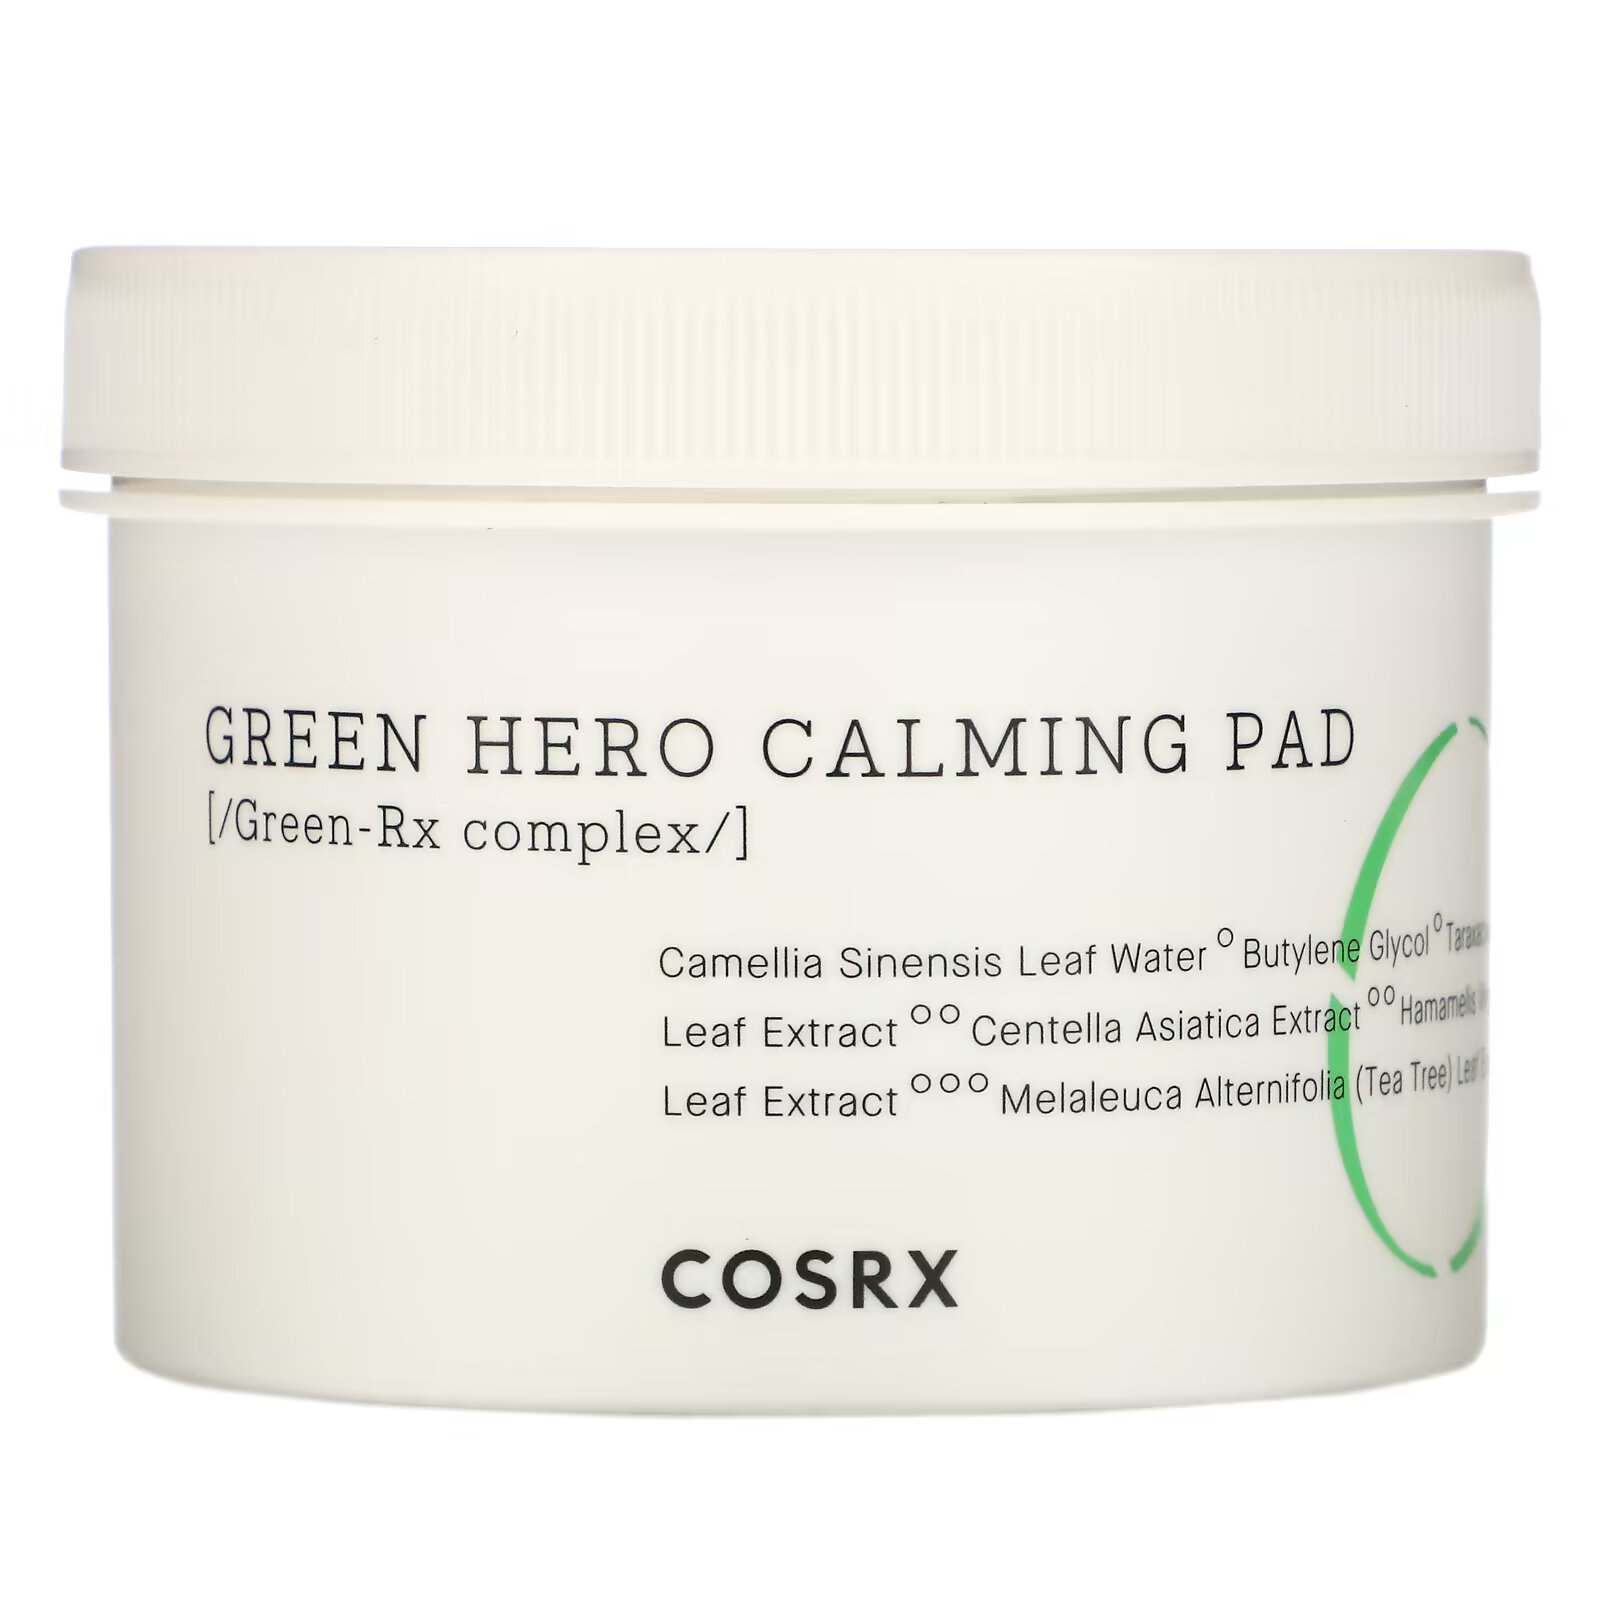 Cosrx, One Step Green Hero Calming Pad, успокаивающие диски, 70 шт., 135 мл (4,56 жидк. унции) успокаивающие пэды для лица cosrx one step green hero calming pad